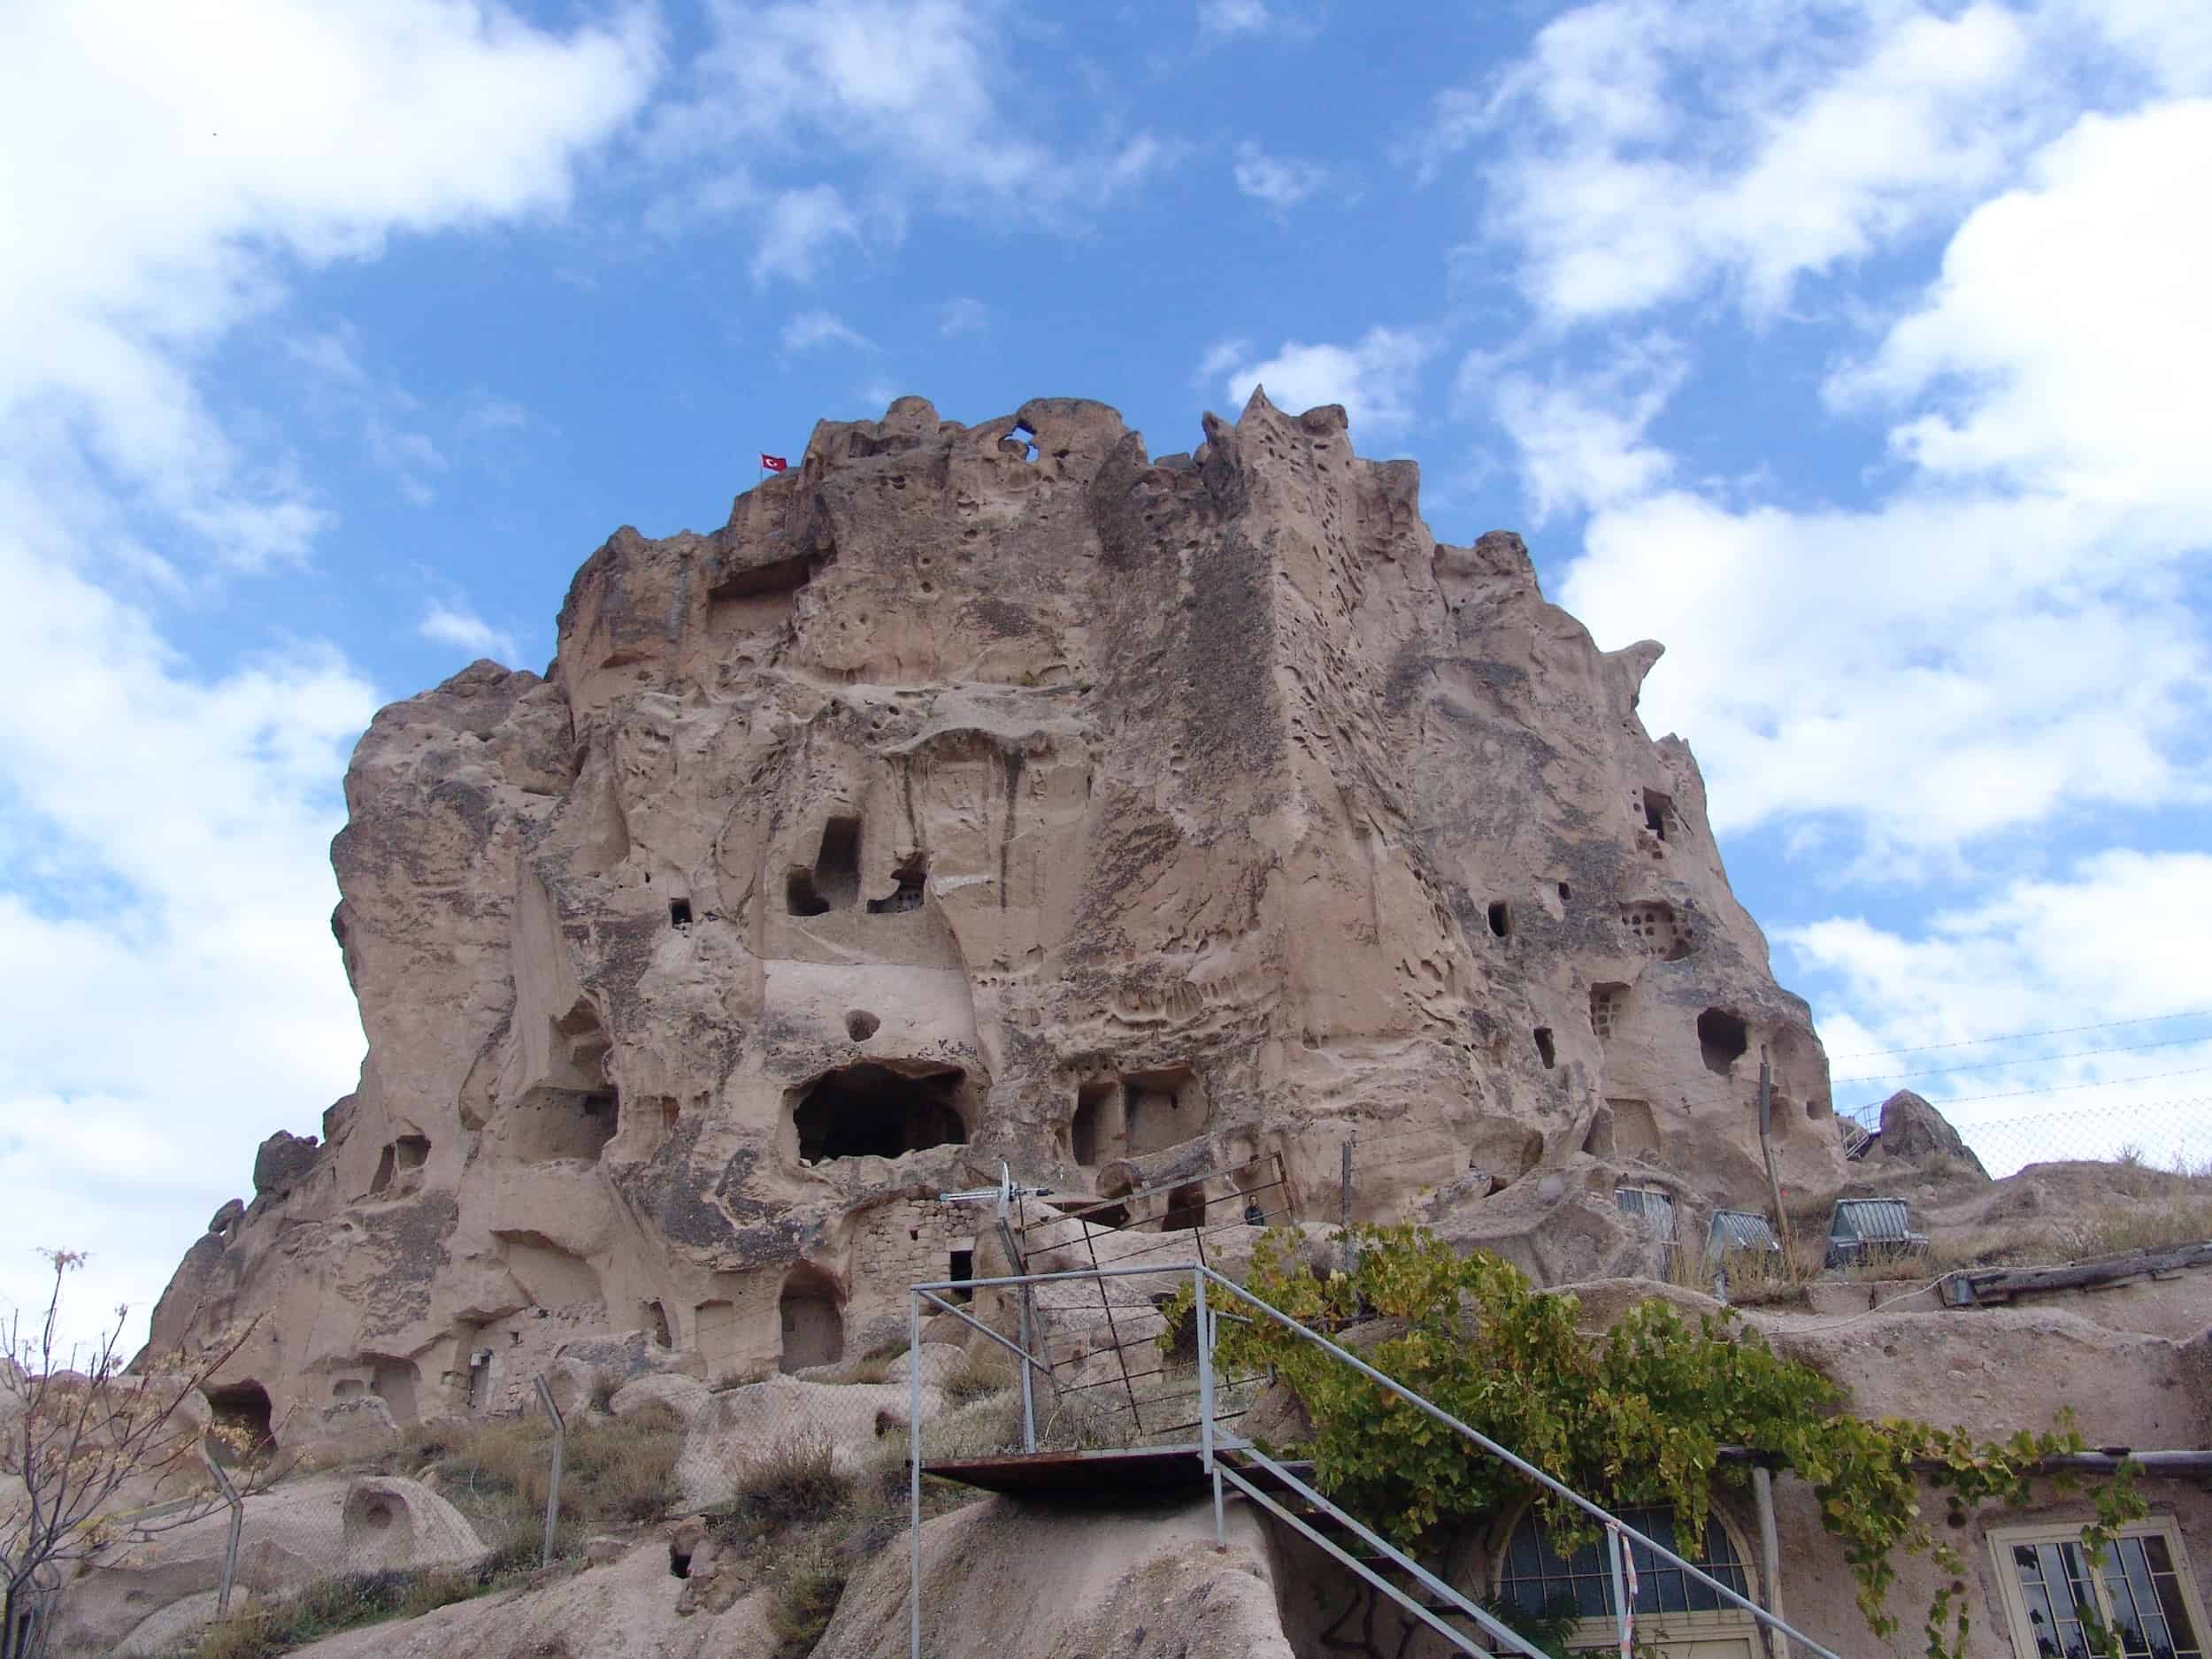 Üçhisar Castle in Cappadocia, Turkey